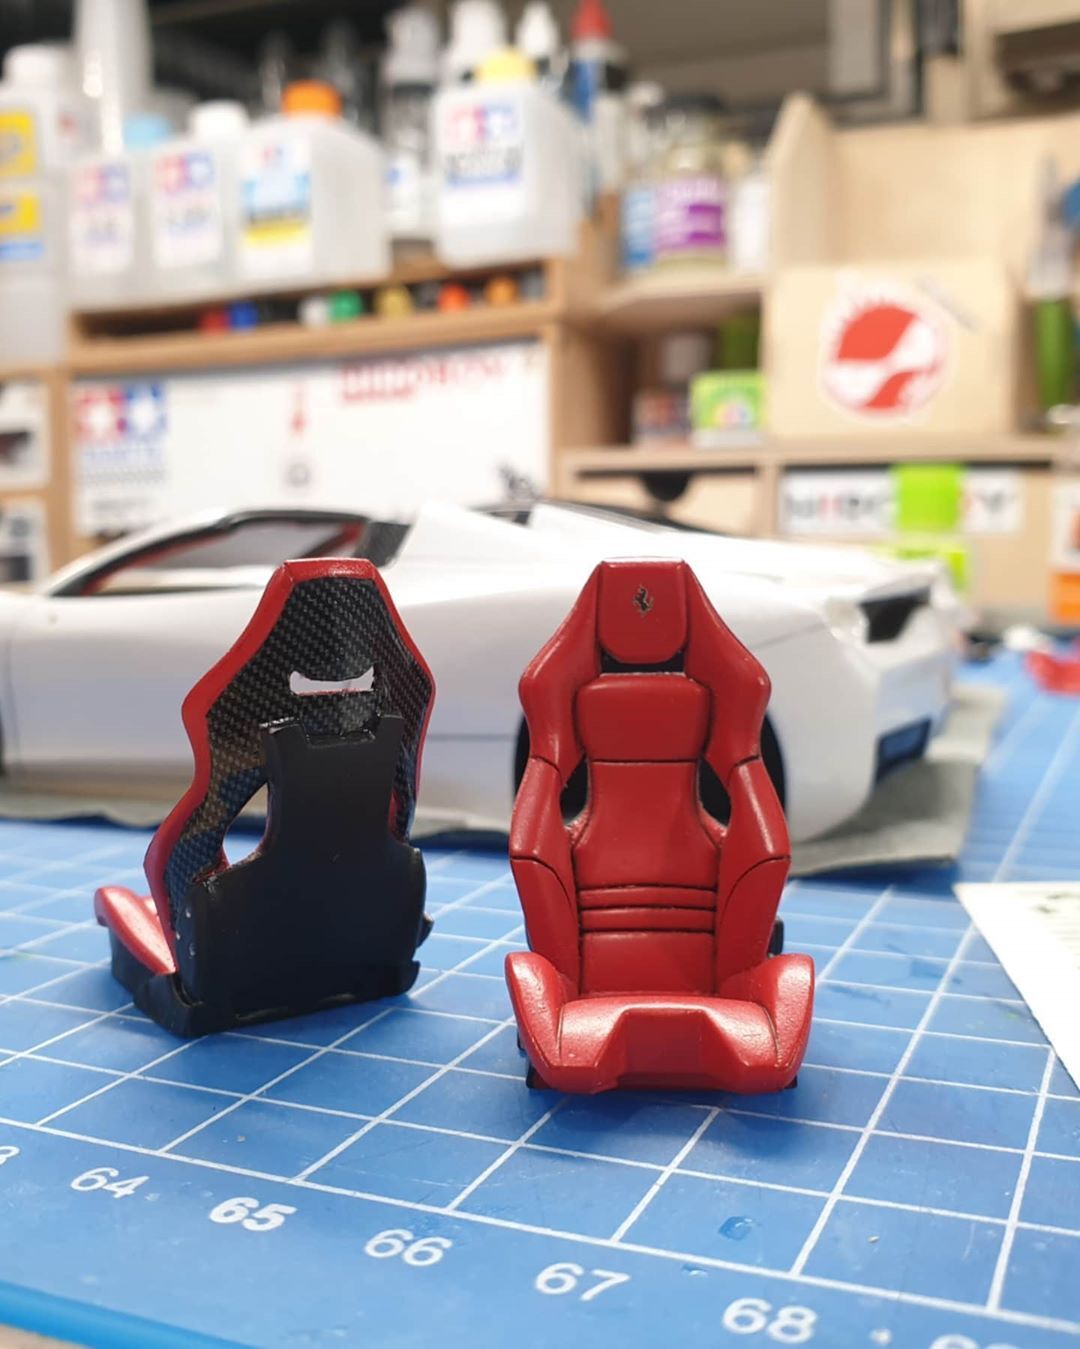 alpha model,1/24 scale model cars,resin car model kits,1/24 Ferrari 458